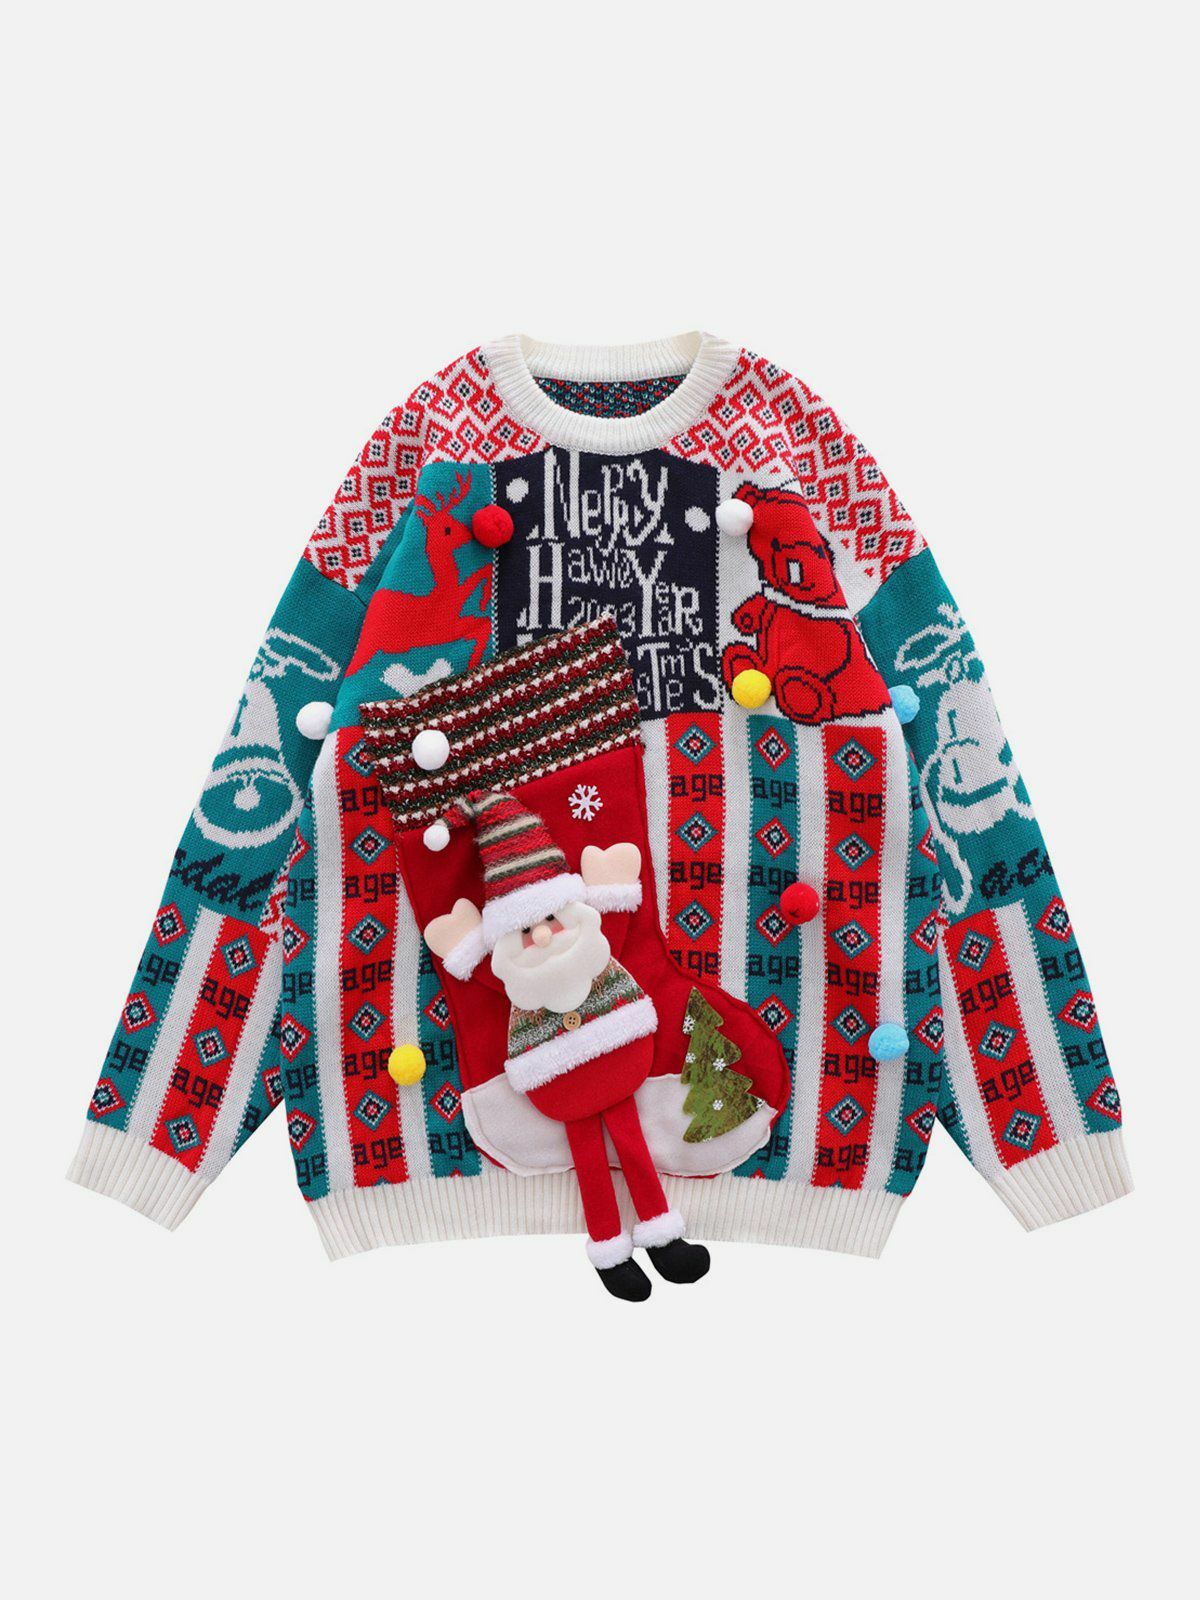 festive santa doll sweater quirky & vibrant holiday fashion 6046